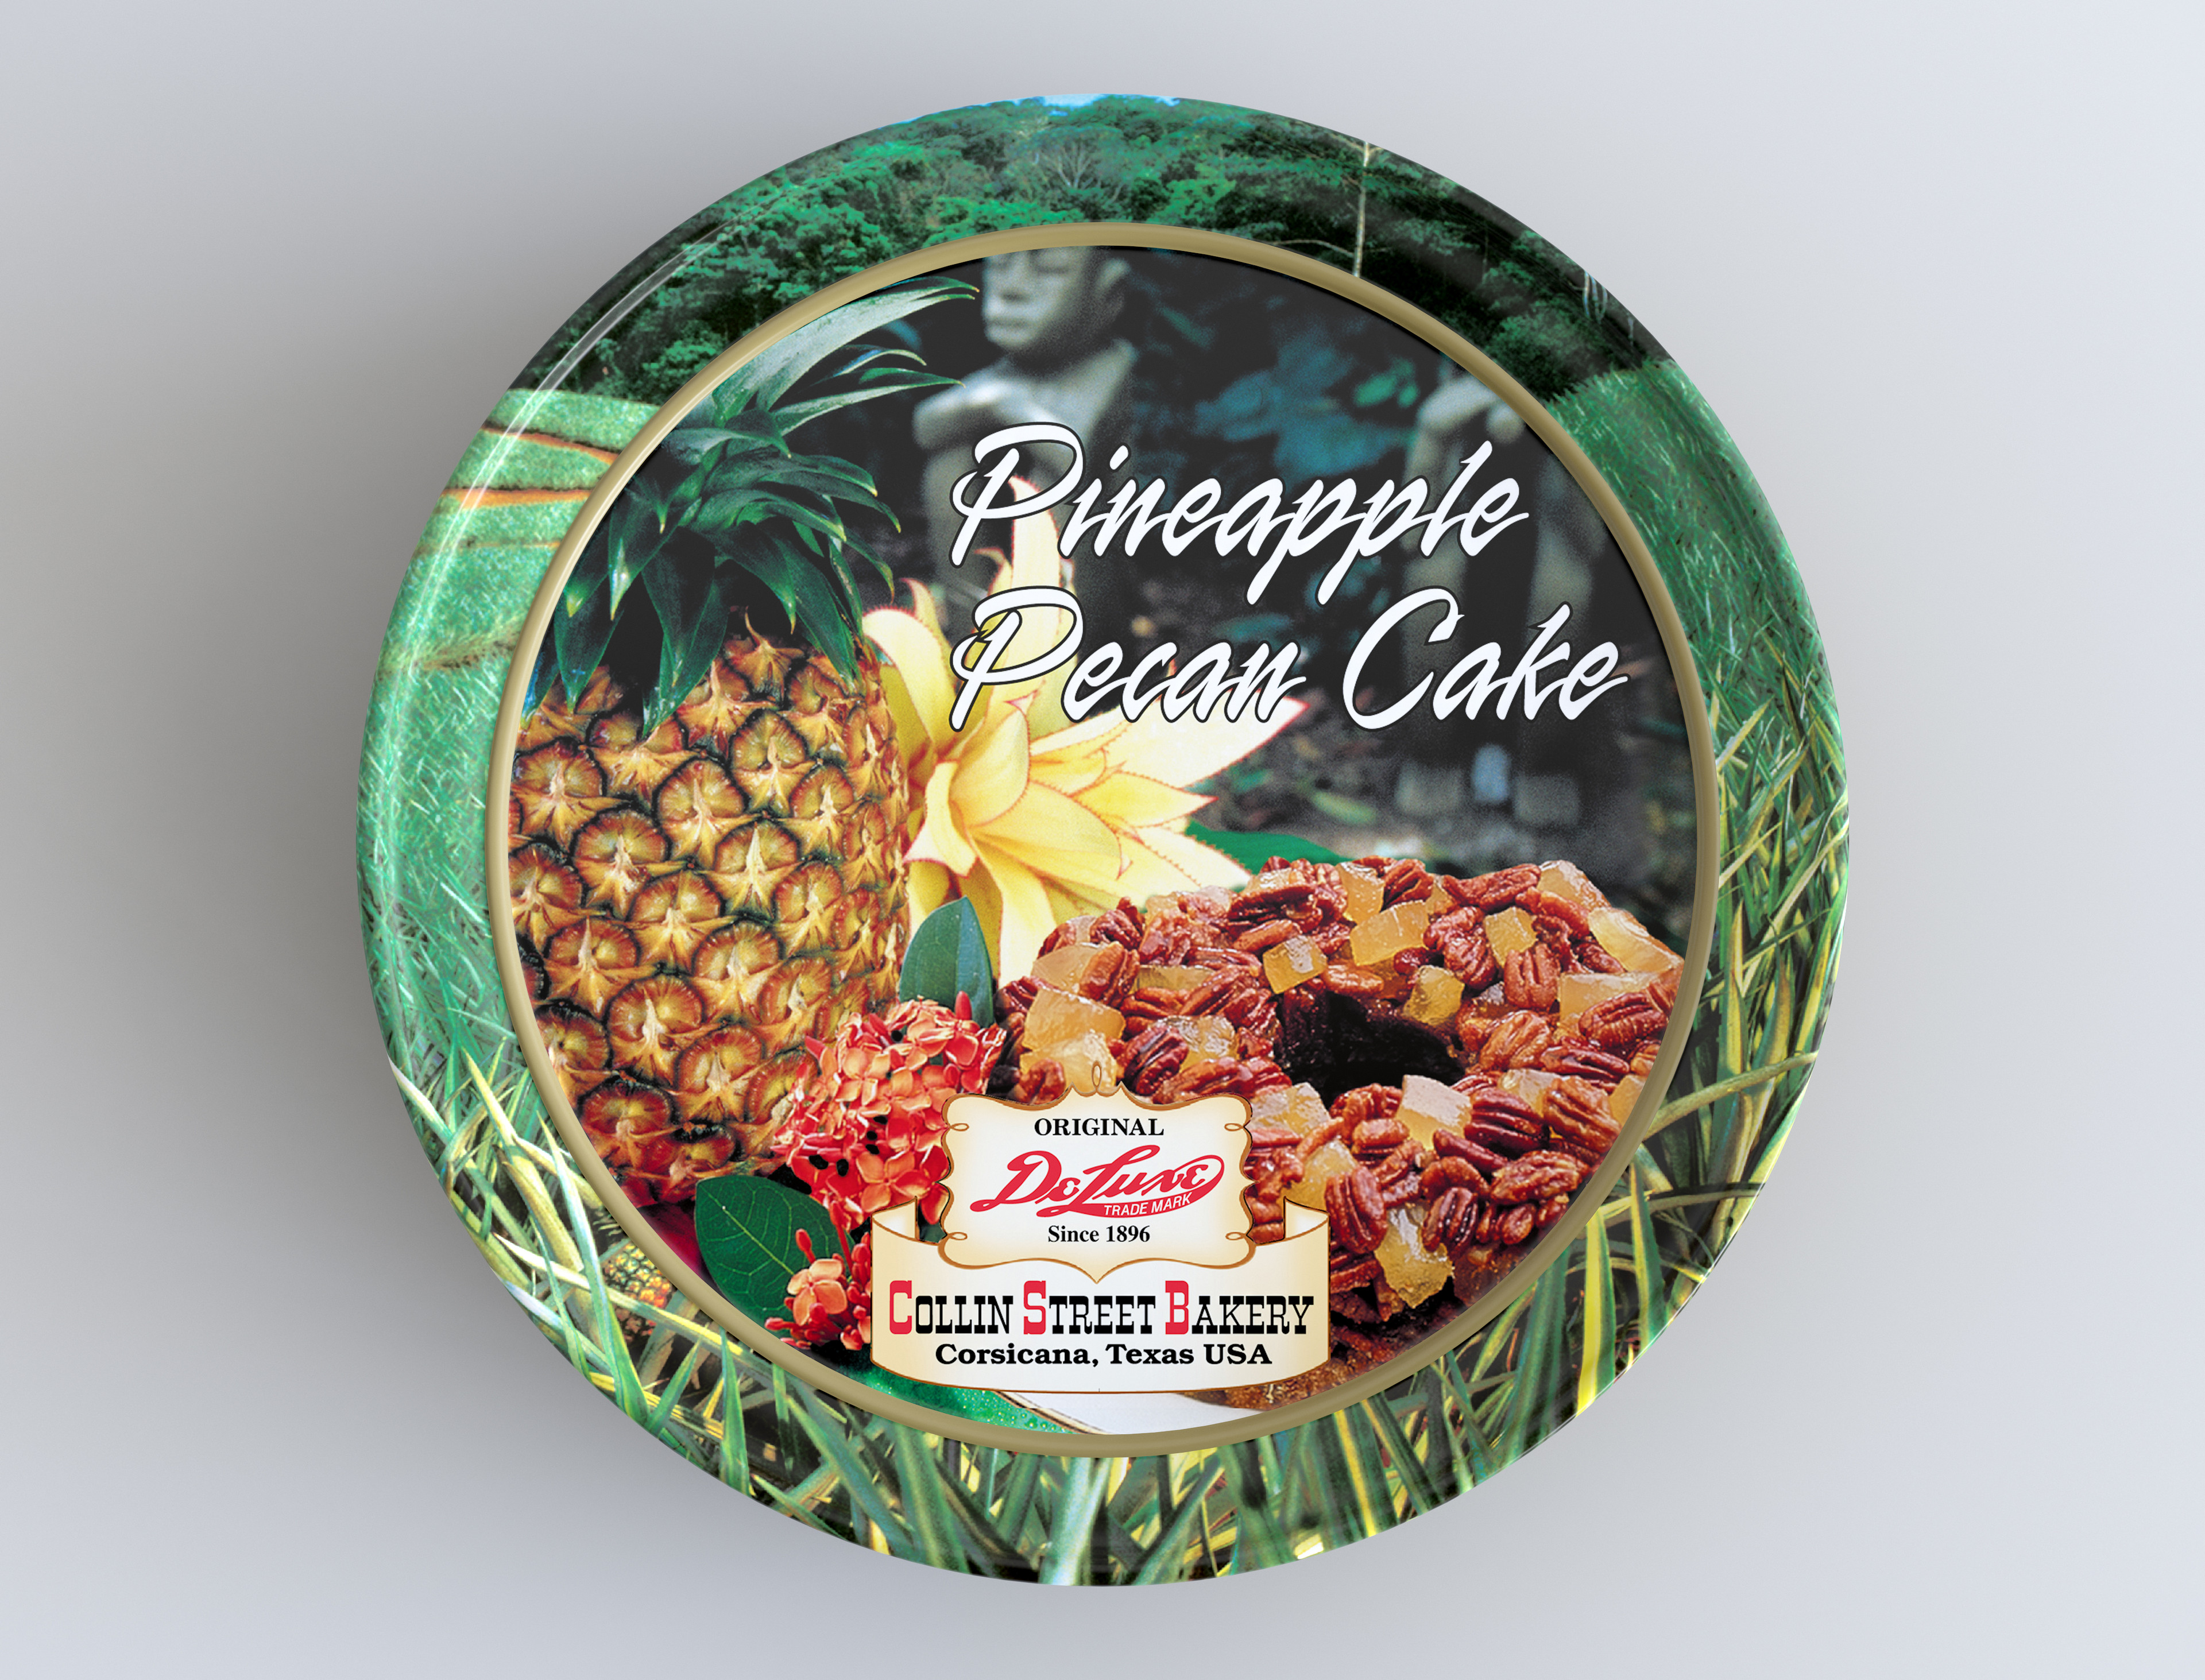 Pineapple Pecan Cake Tin - Top